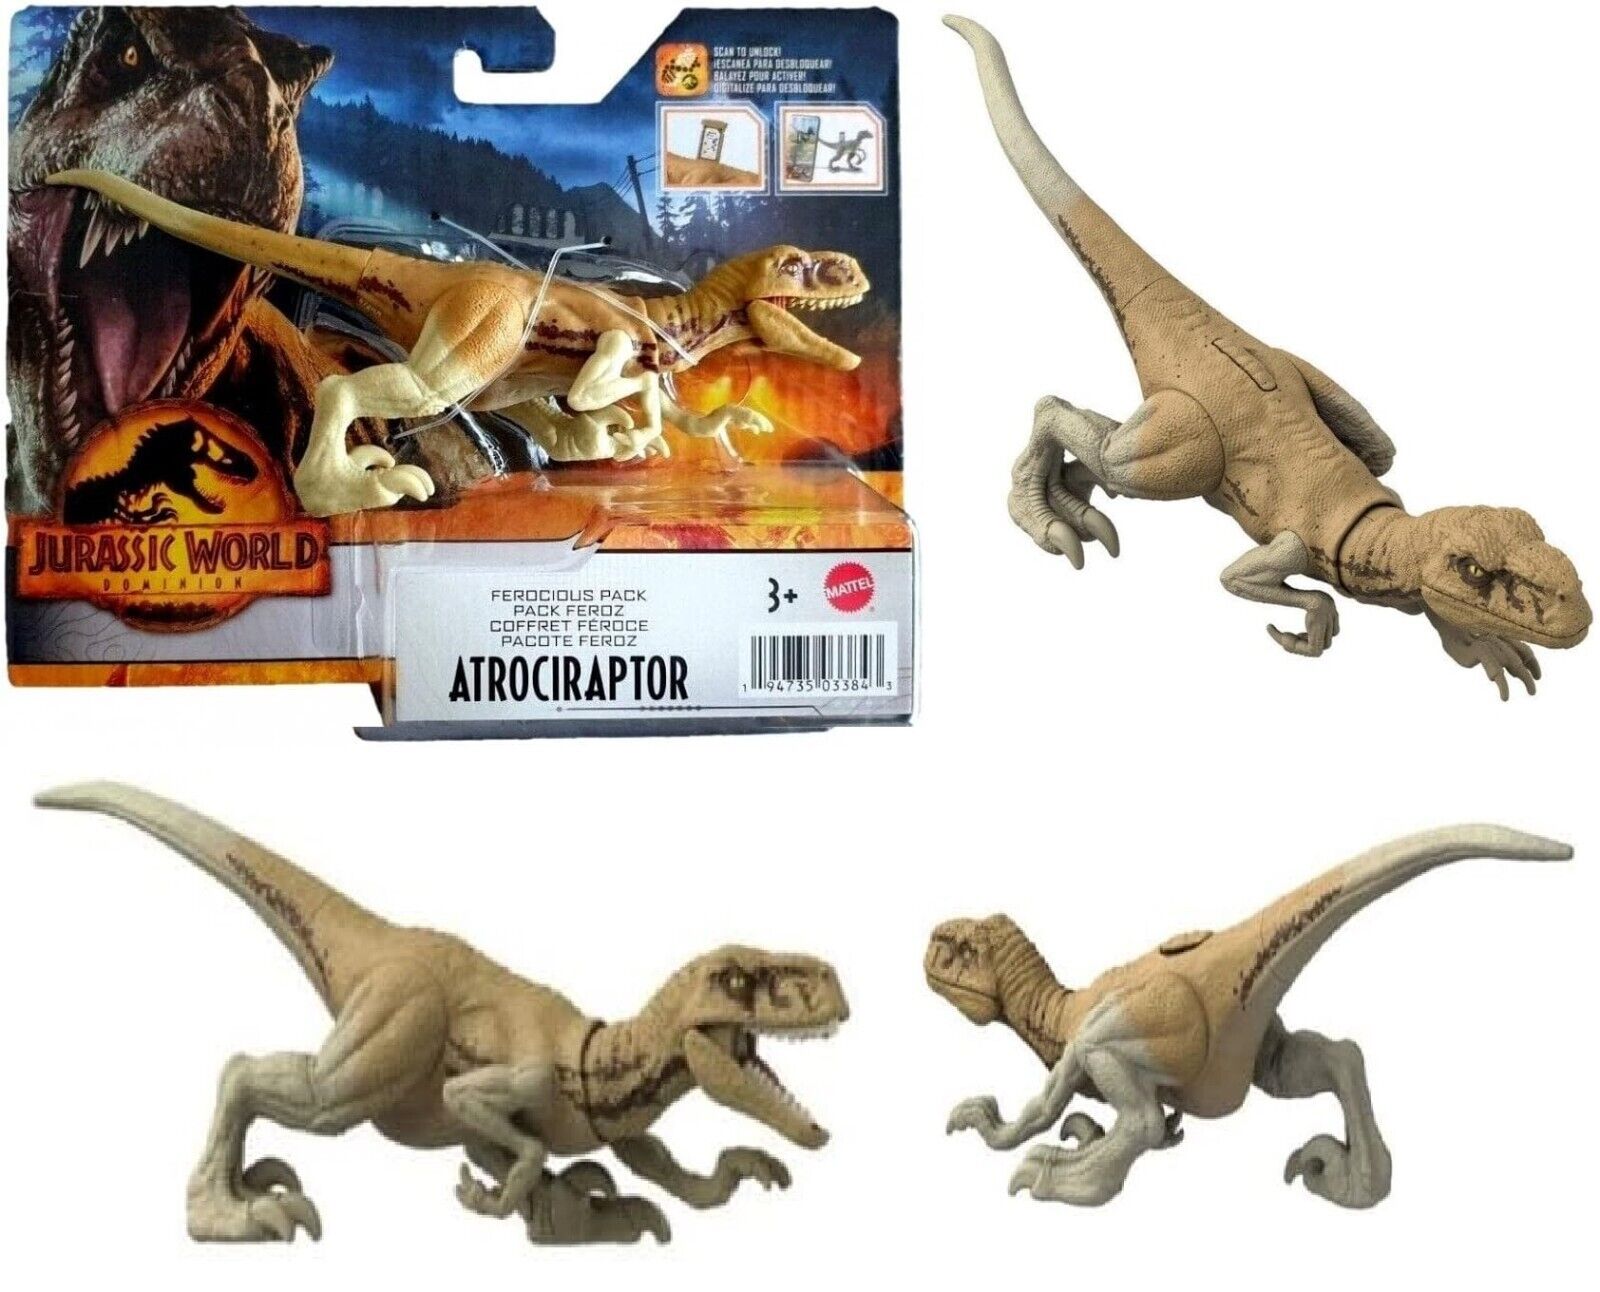 Ferocious　Pack　Jurassic　Play　Dinosaur　3+　MyDeal　Toy　Ages　Buy　2-Dominion　World-Atrociraptor　Dino